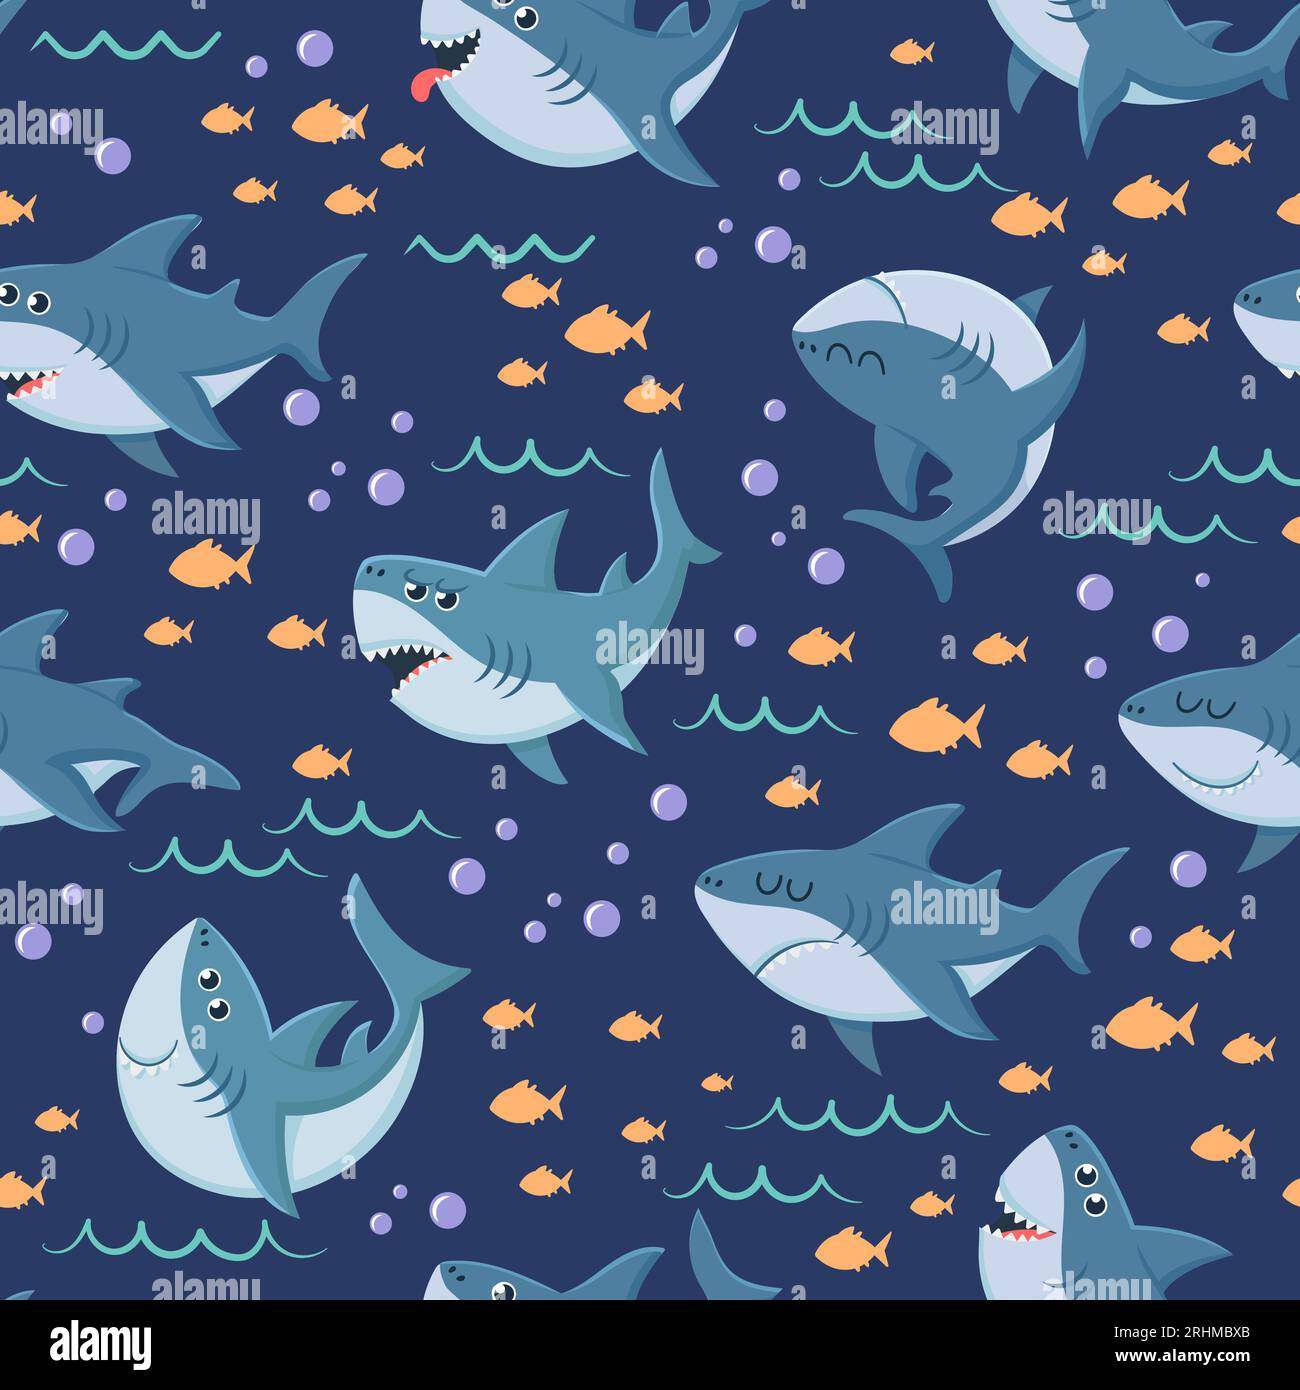 Download Shark Sea Fish RoyaltyFree Stock Illustration Image  Pixabay